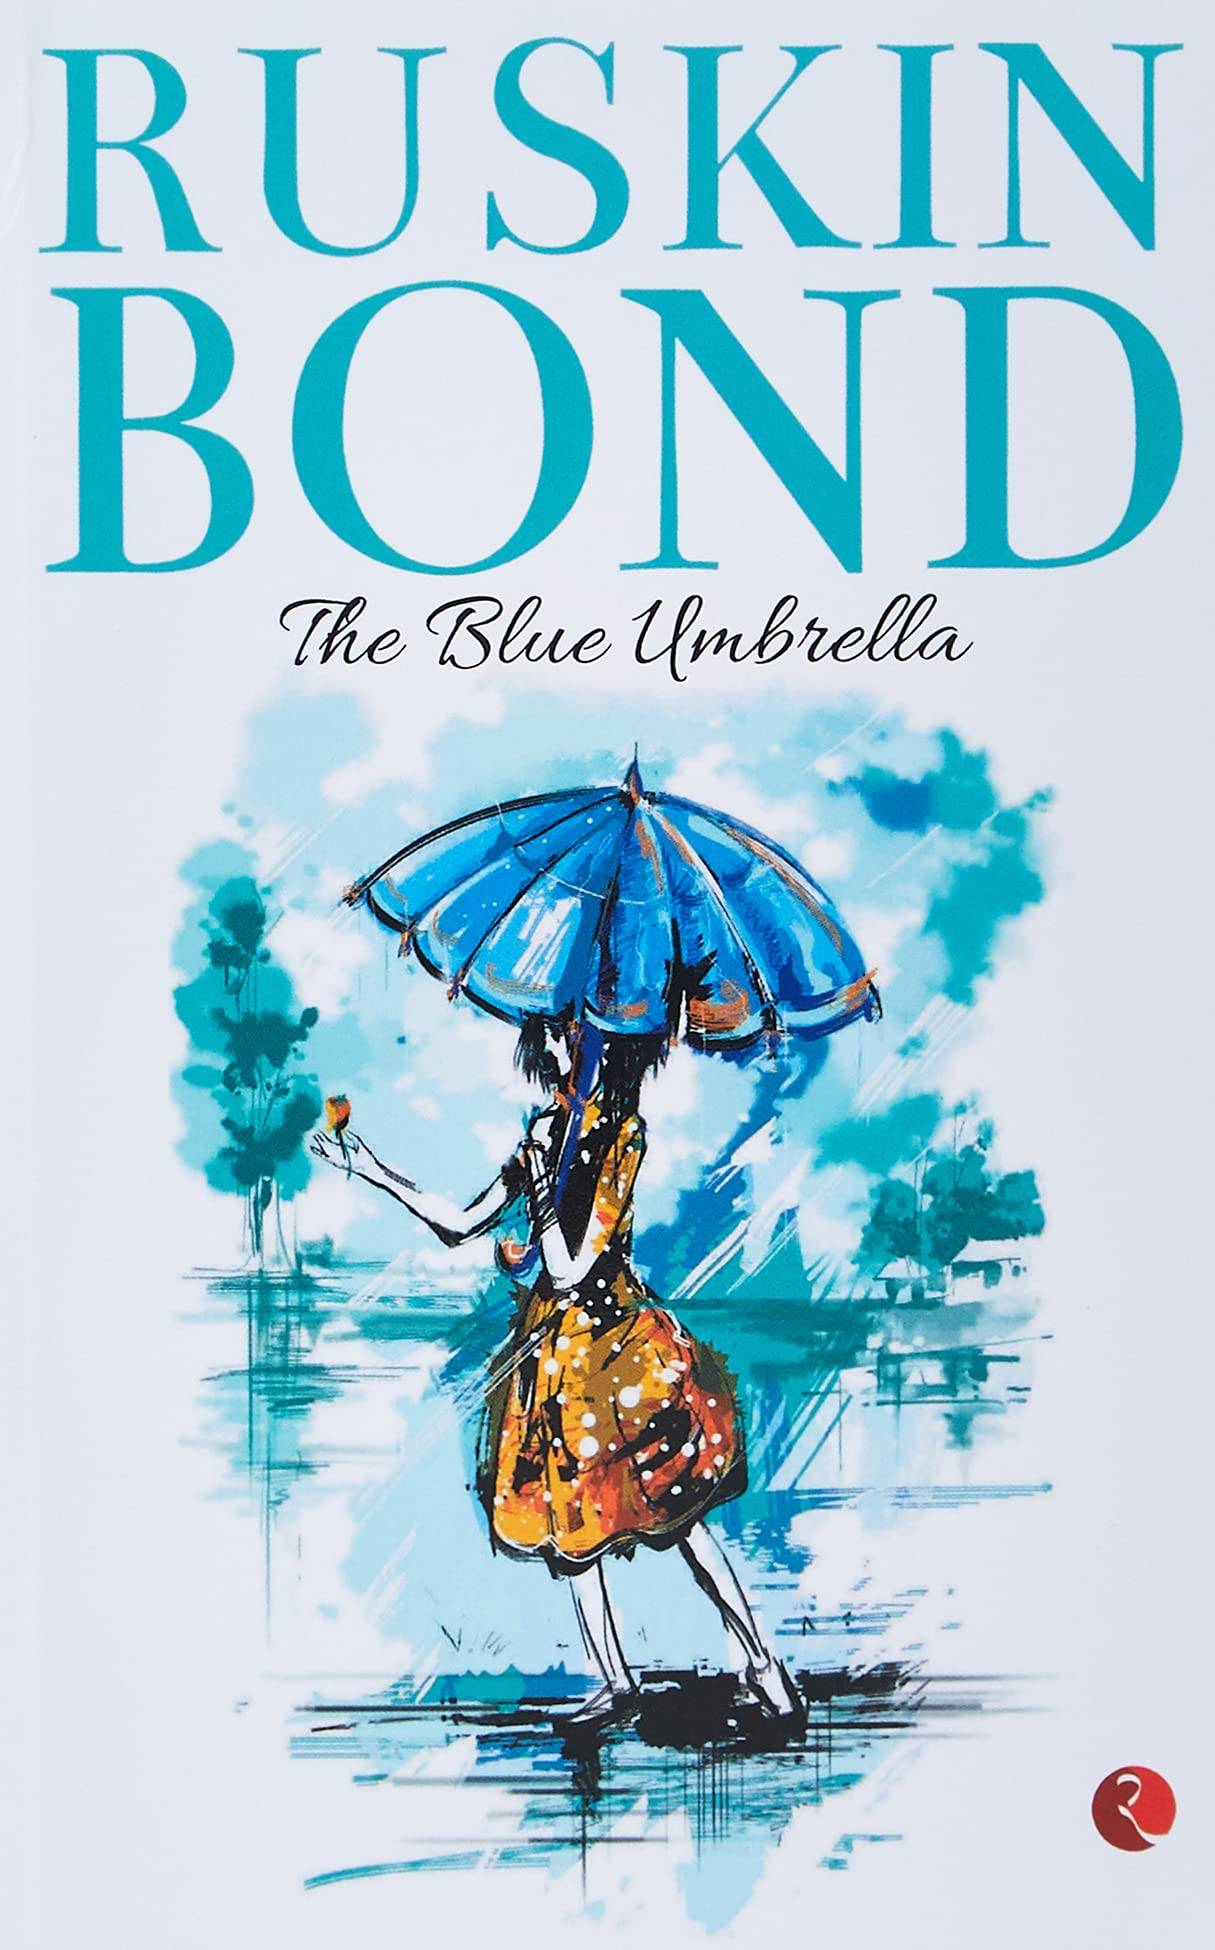 IMG : The Blue Umbrella